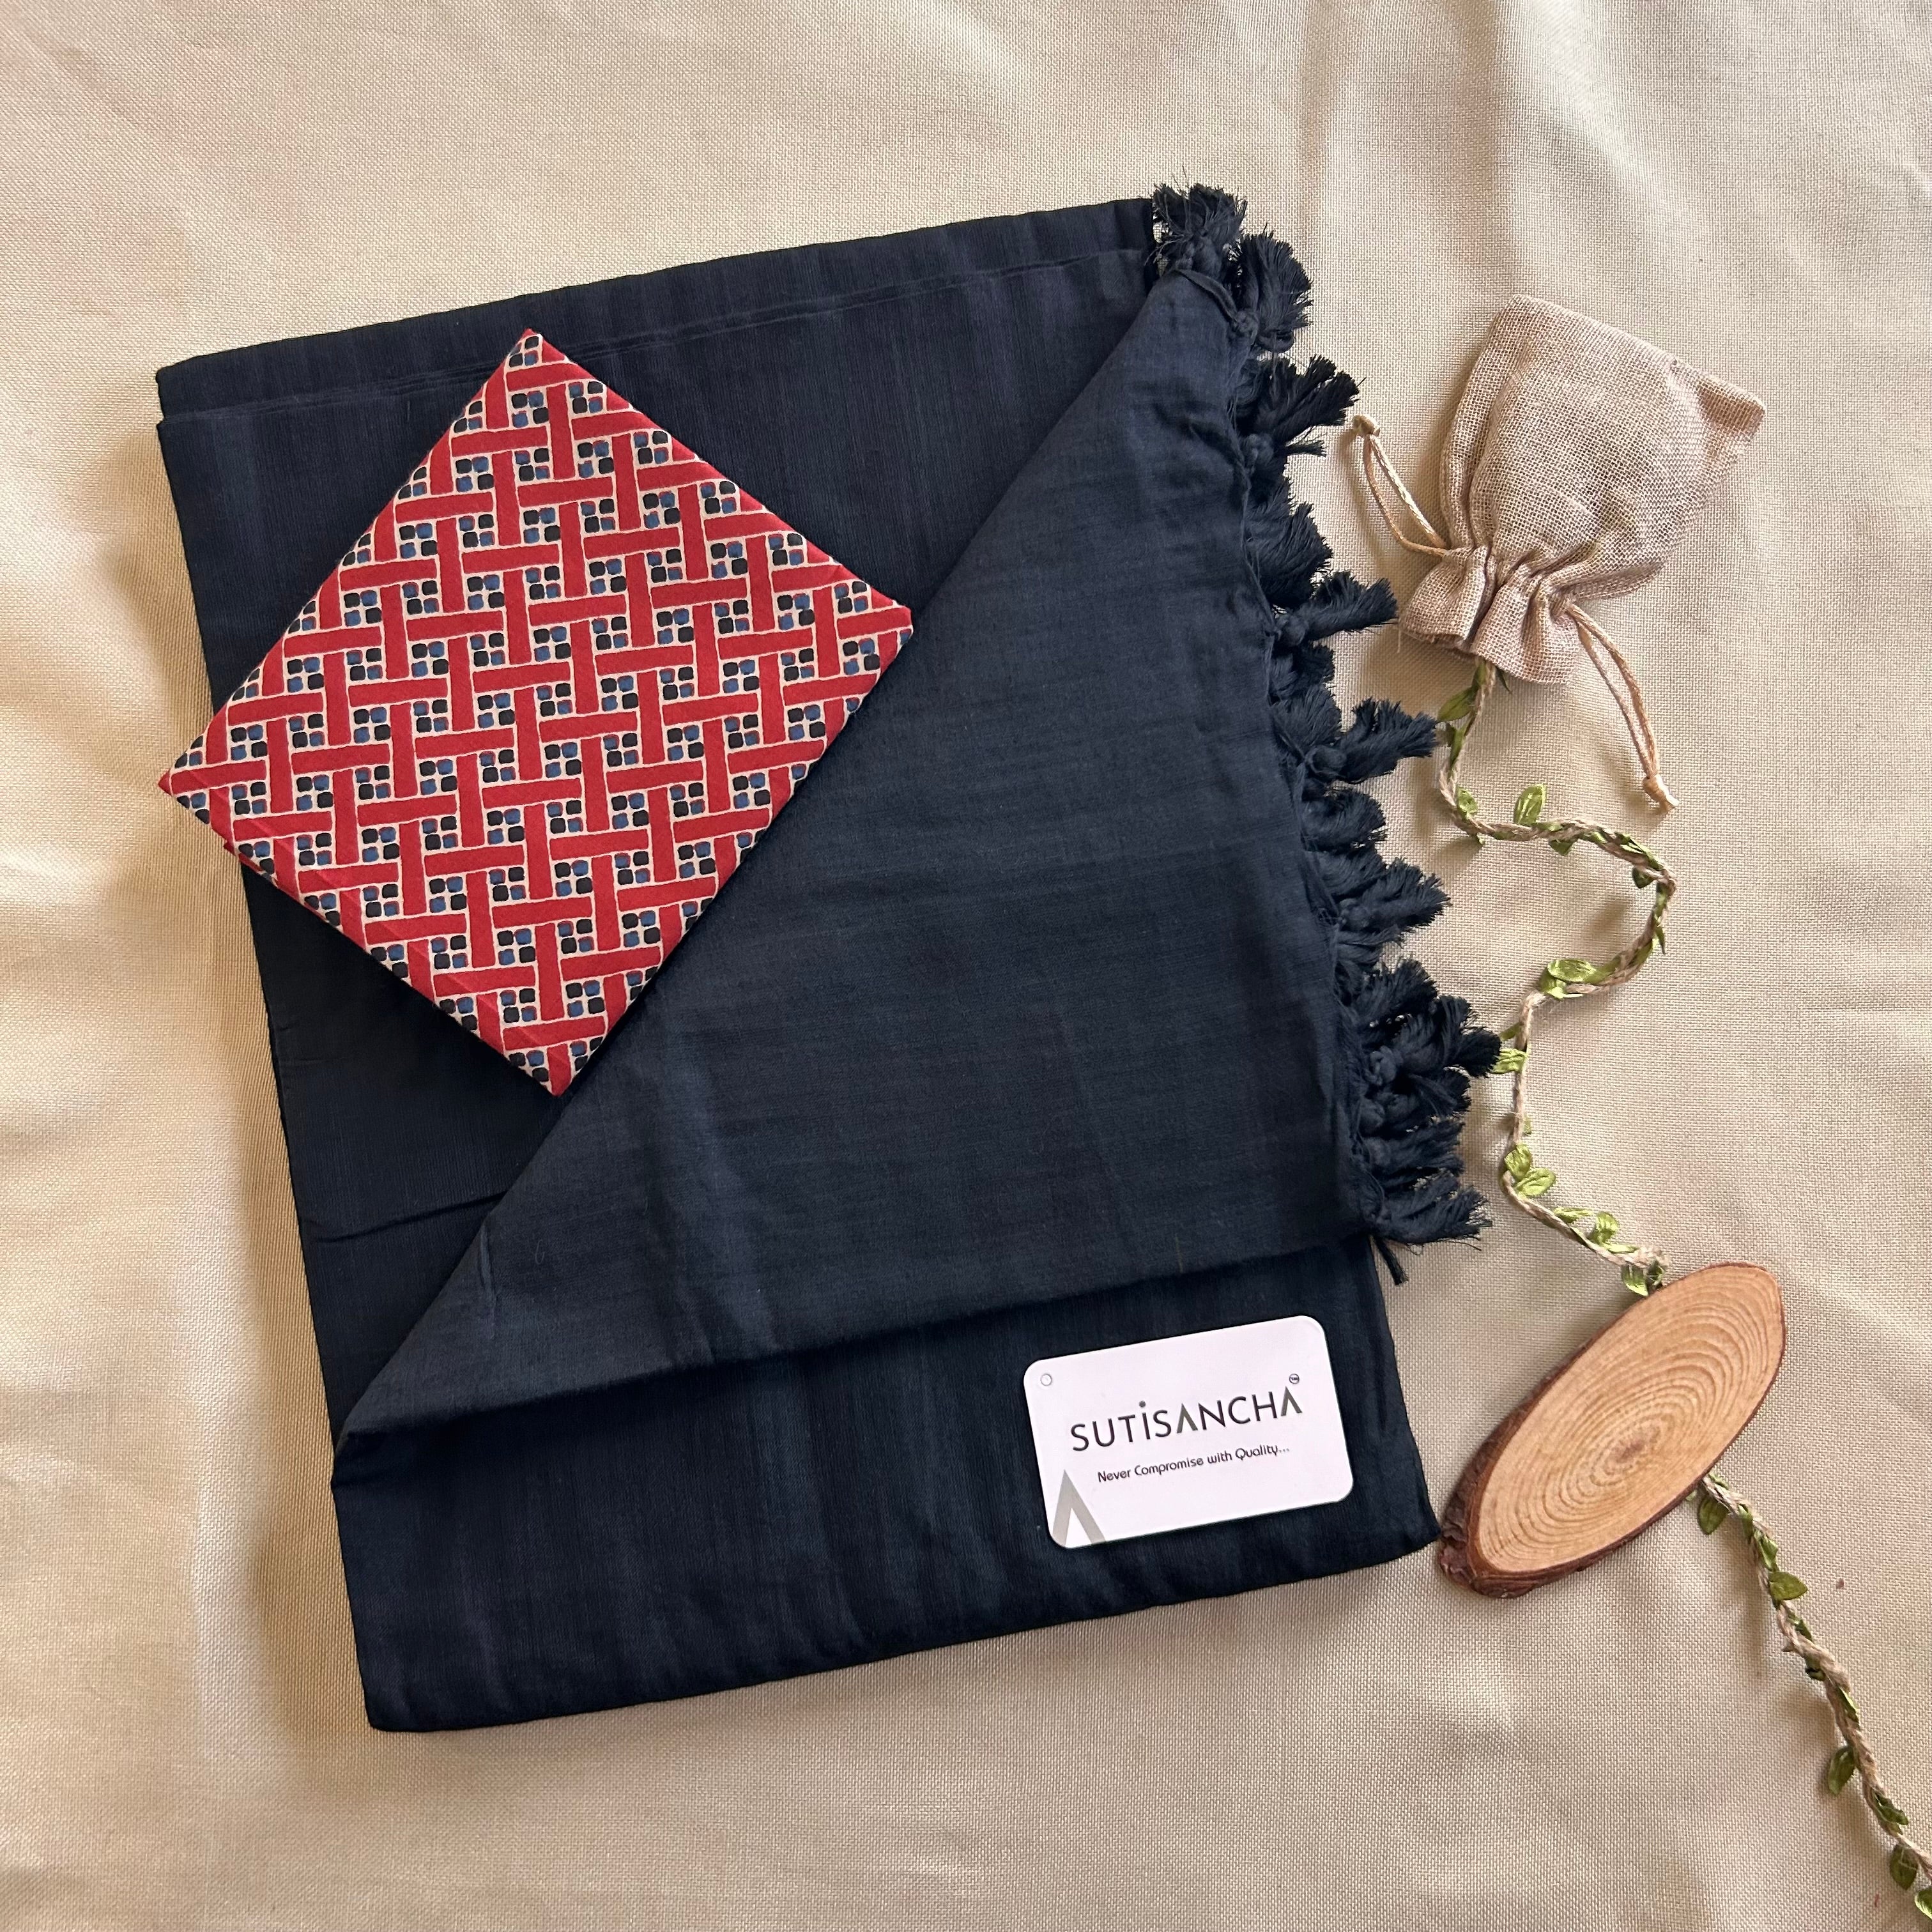 Sutisancha Black Handloom Cotton Saree & Designer Blouse